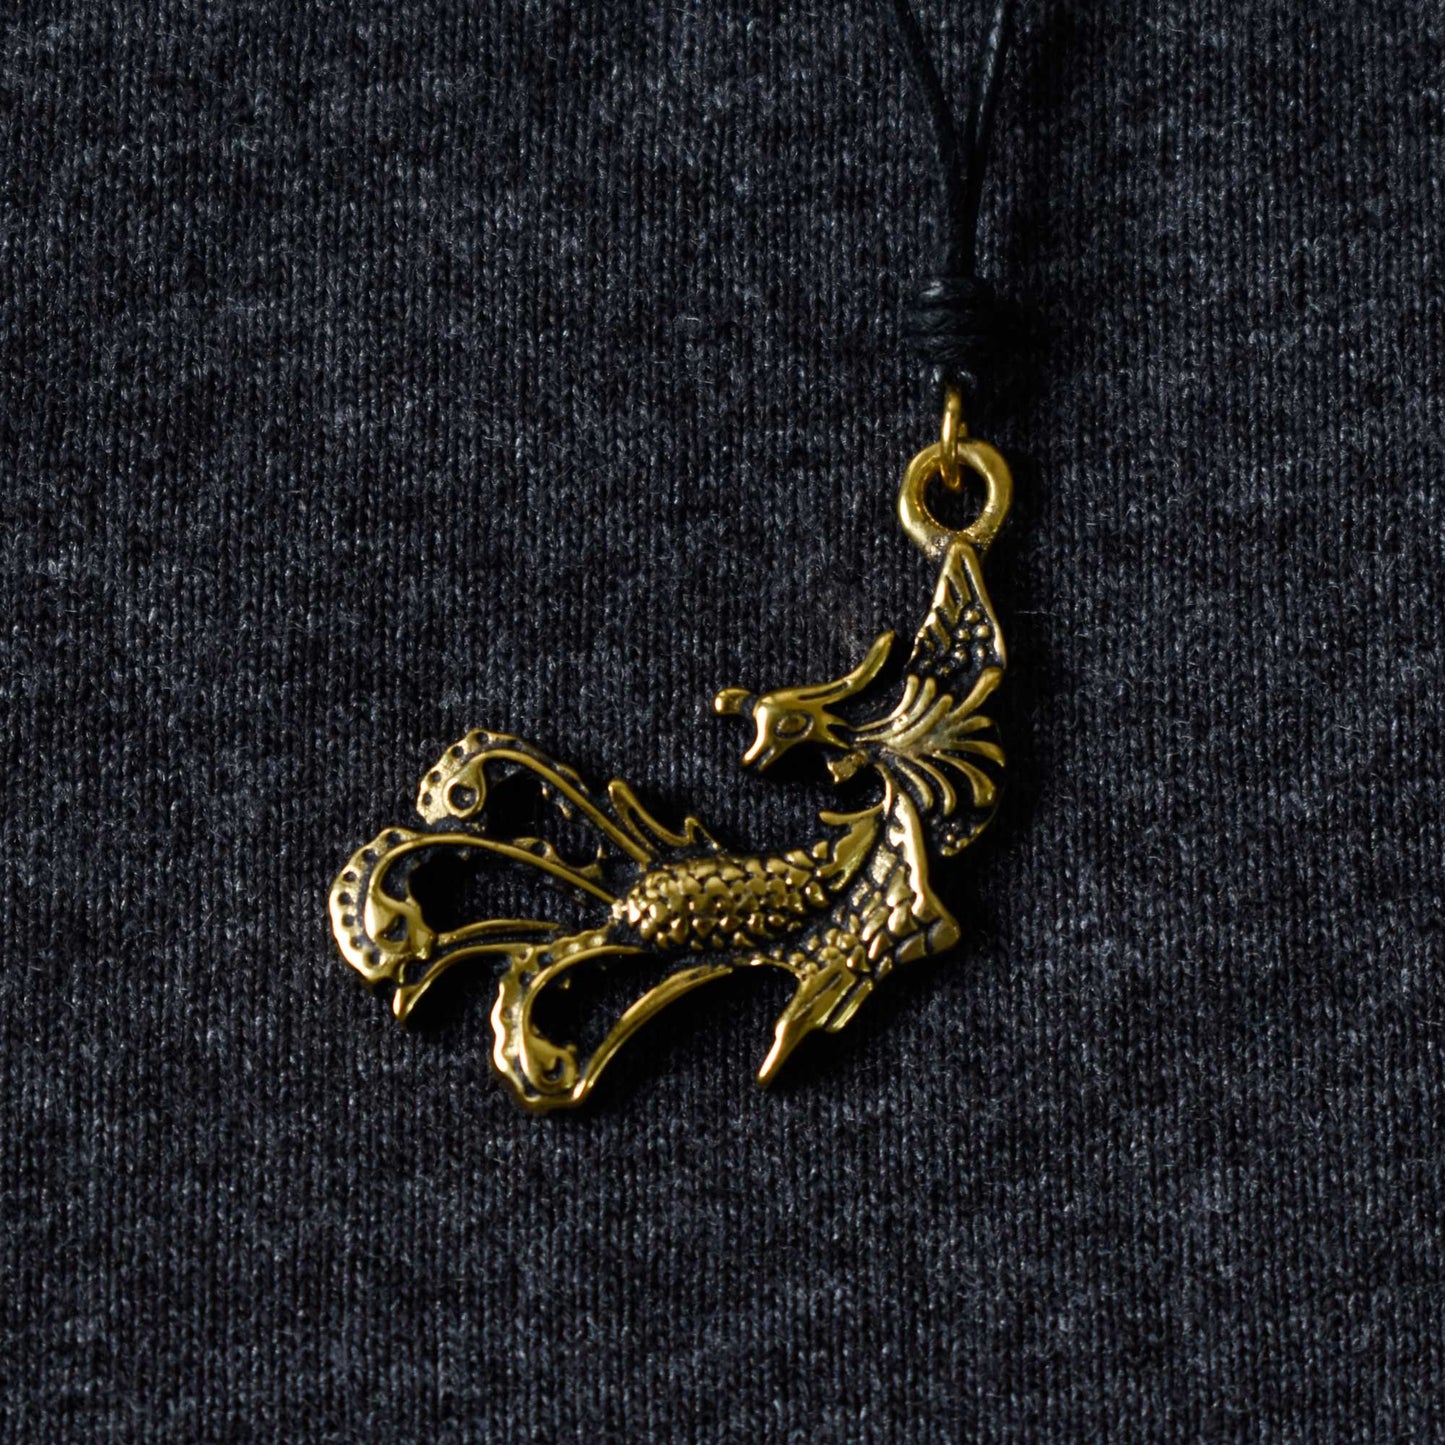 Phoenix Bird Dragon Handmade Brass Necklace Pendant Jewelry